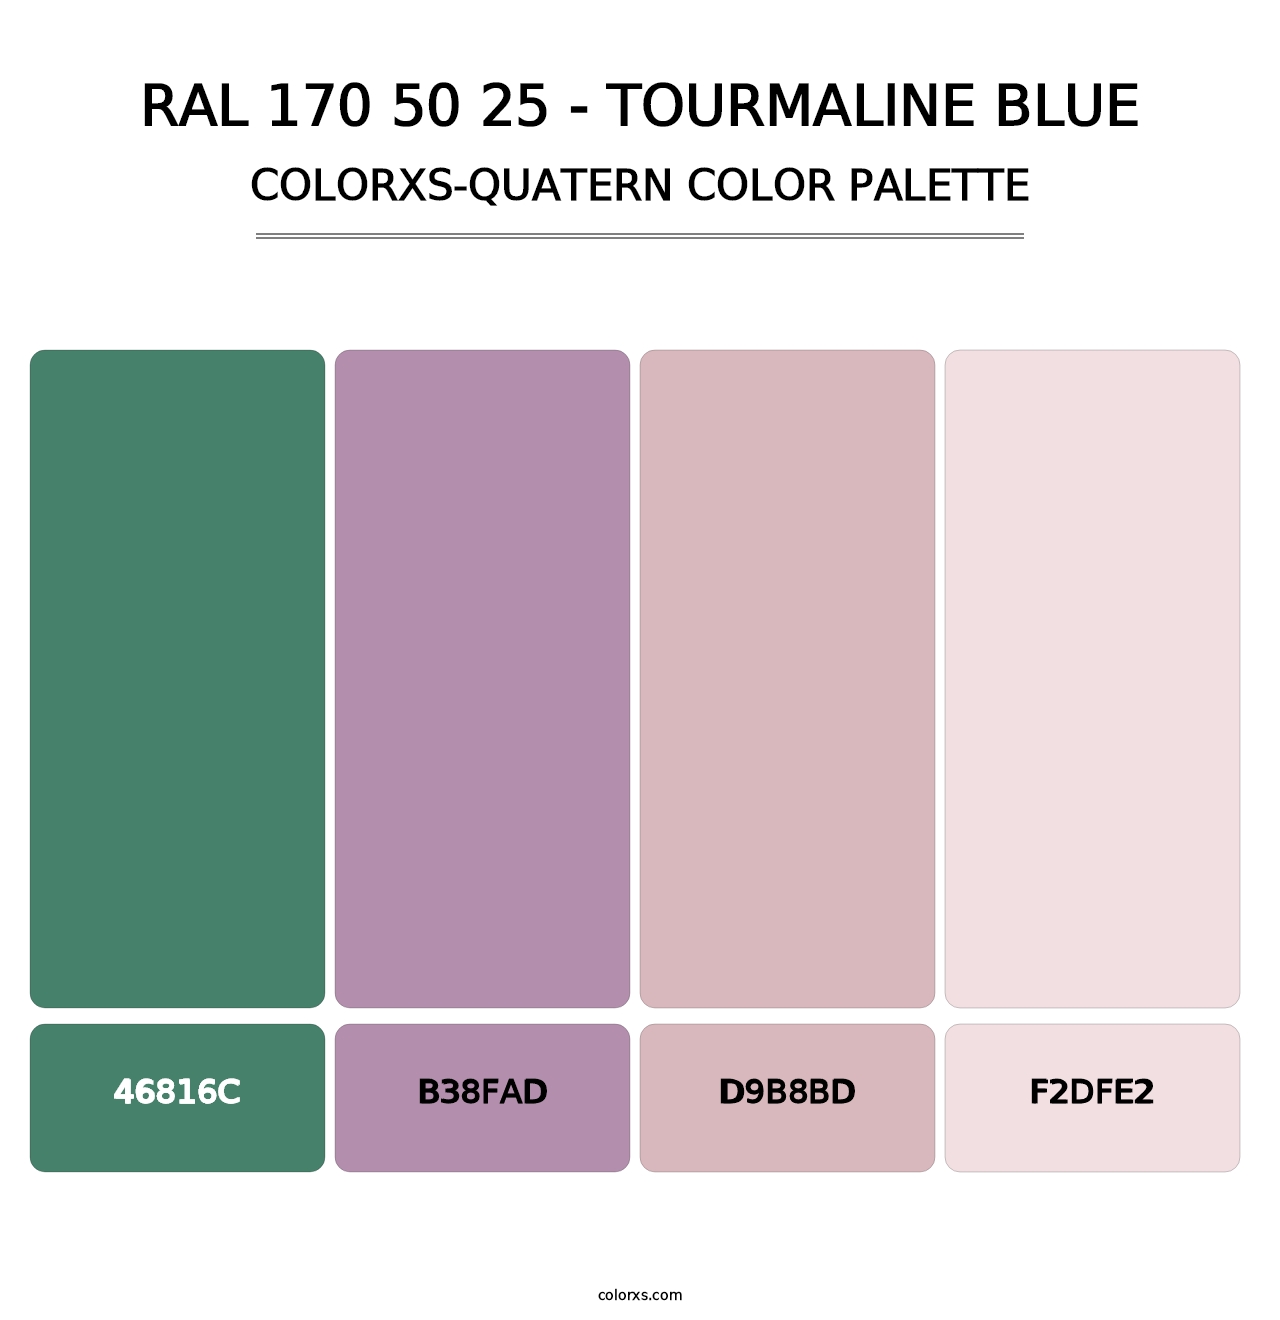 RAL 170 50 25 - Tourmaline Blue - Colorxs Quatern Palette